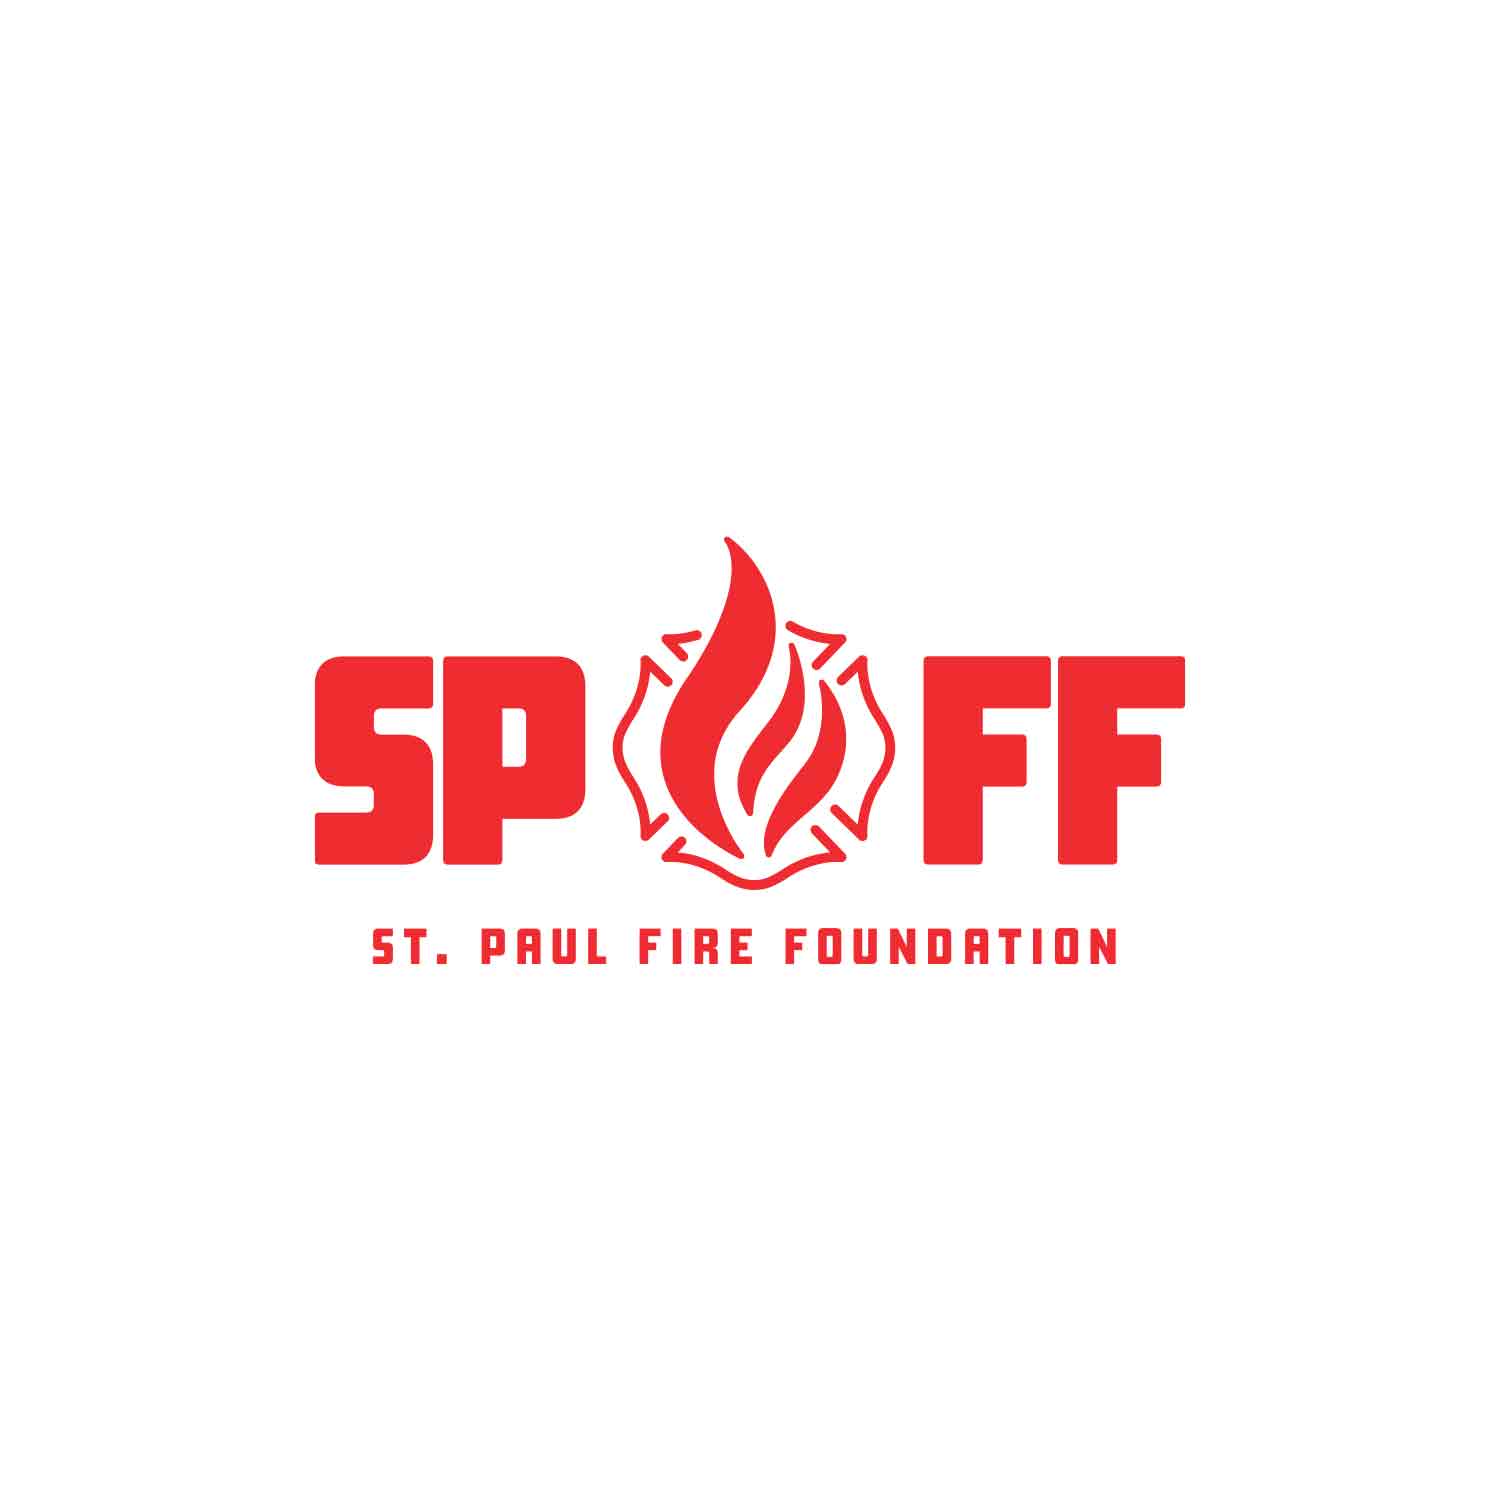 St. Paul Fire Foundation logo by OLSON MCINTYRE